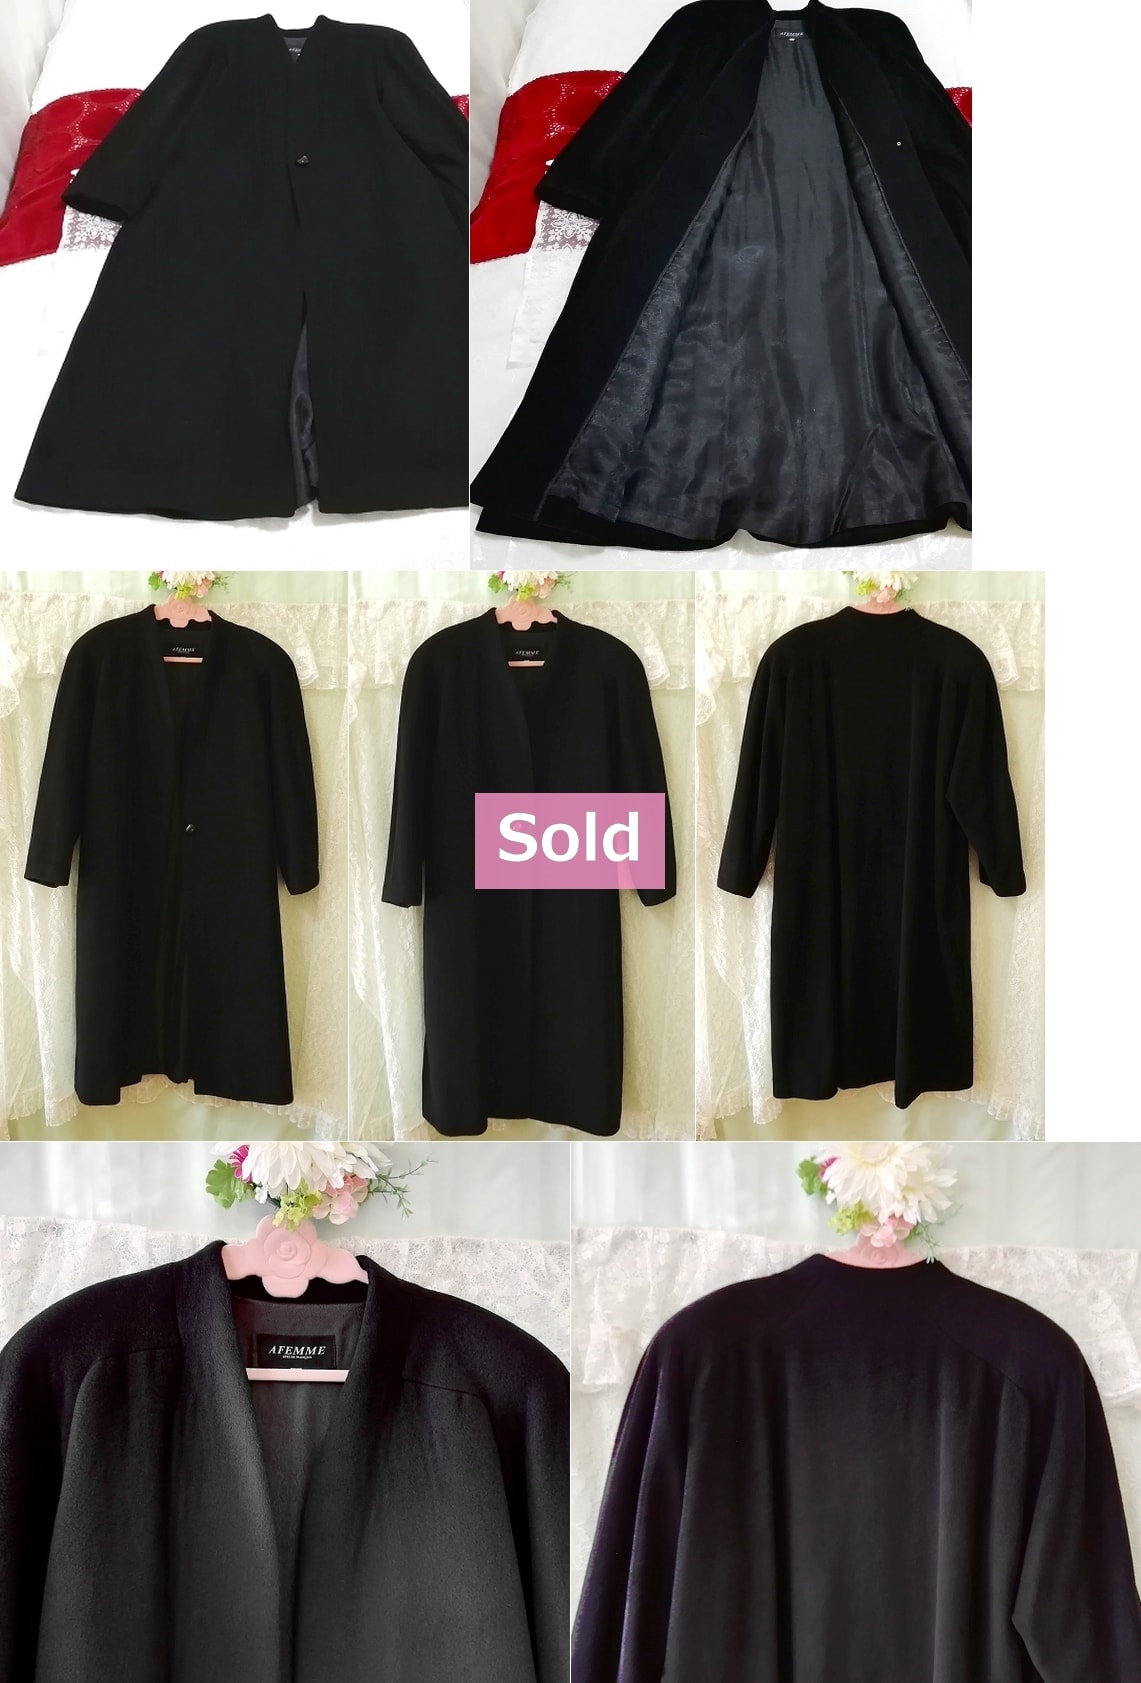 AFEMME Atelier Franais 100% черный длинный кардиган макси пальто Кашемир 100% черный длинный кардиган пальто